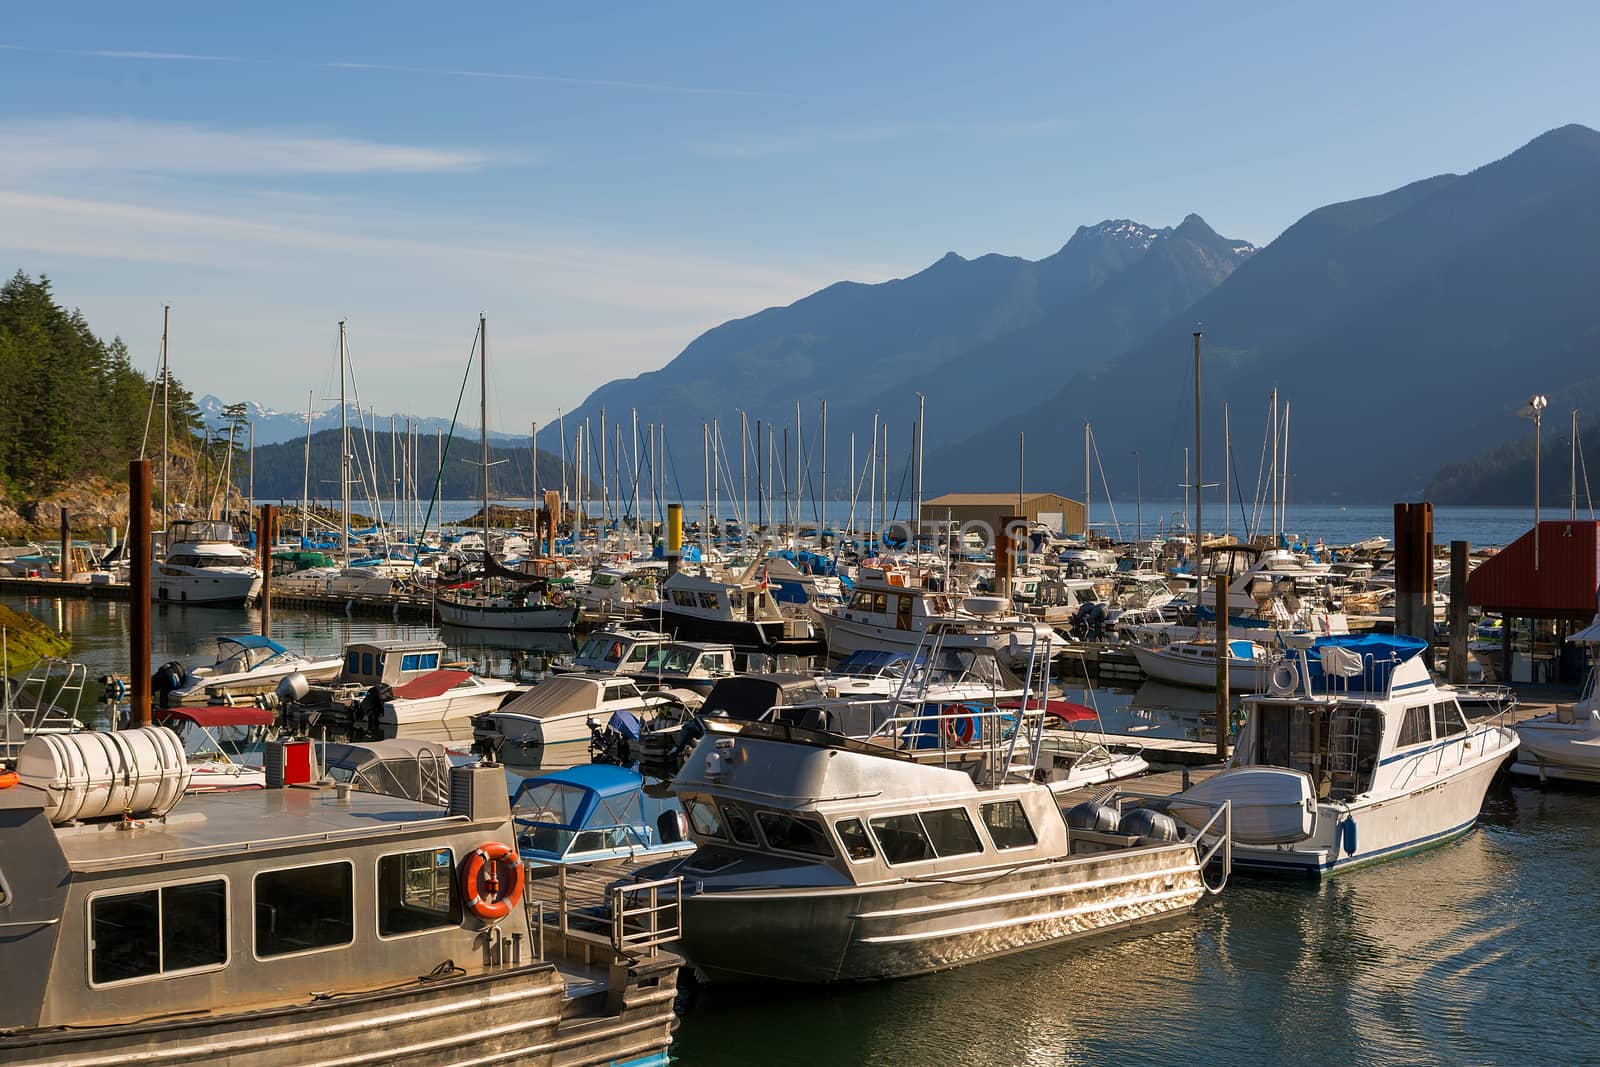 Marina at Horseshoe Bay in British Columbia by jpldesigns